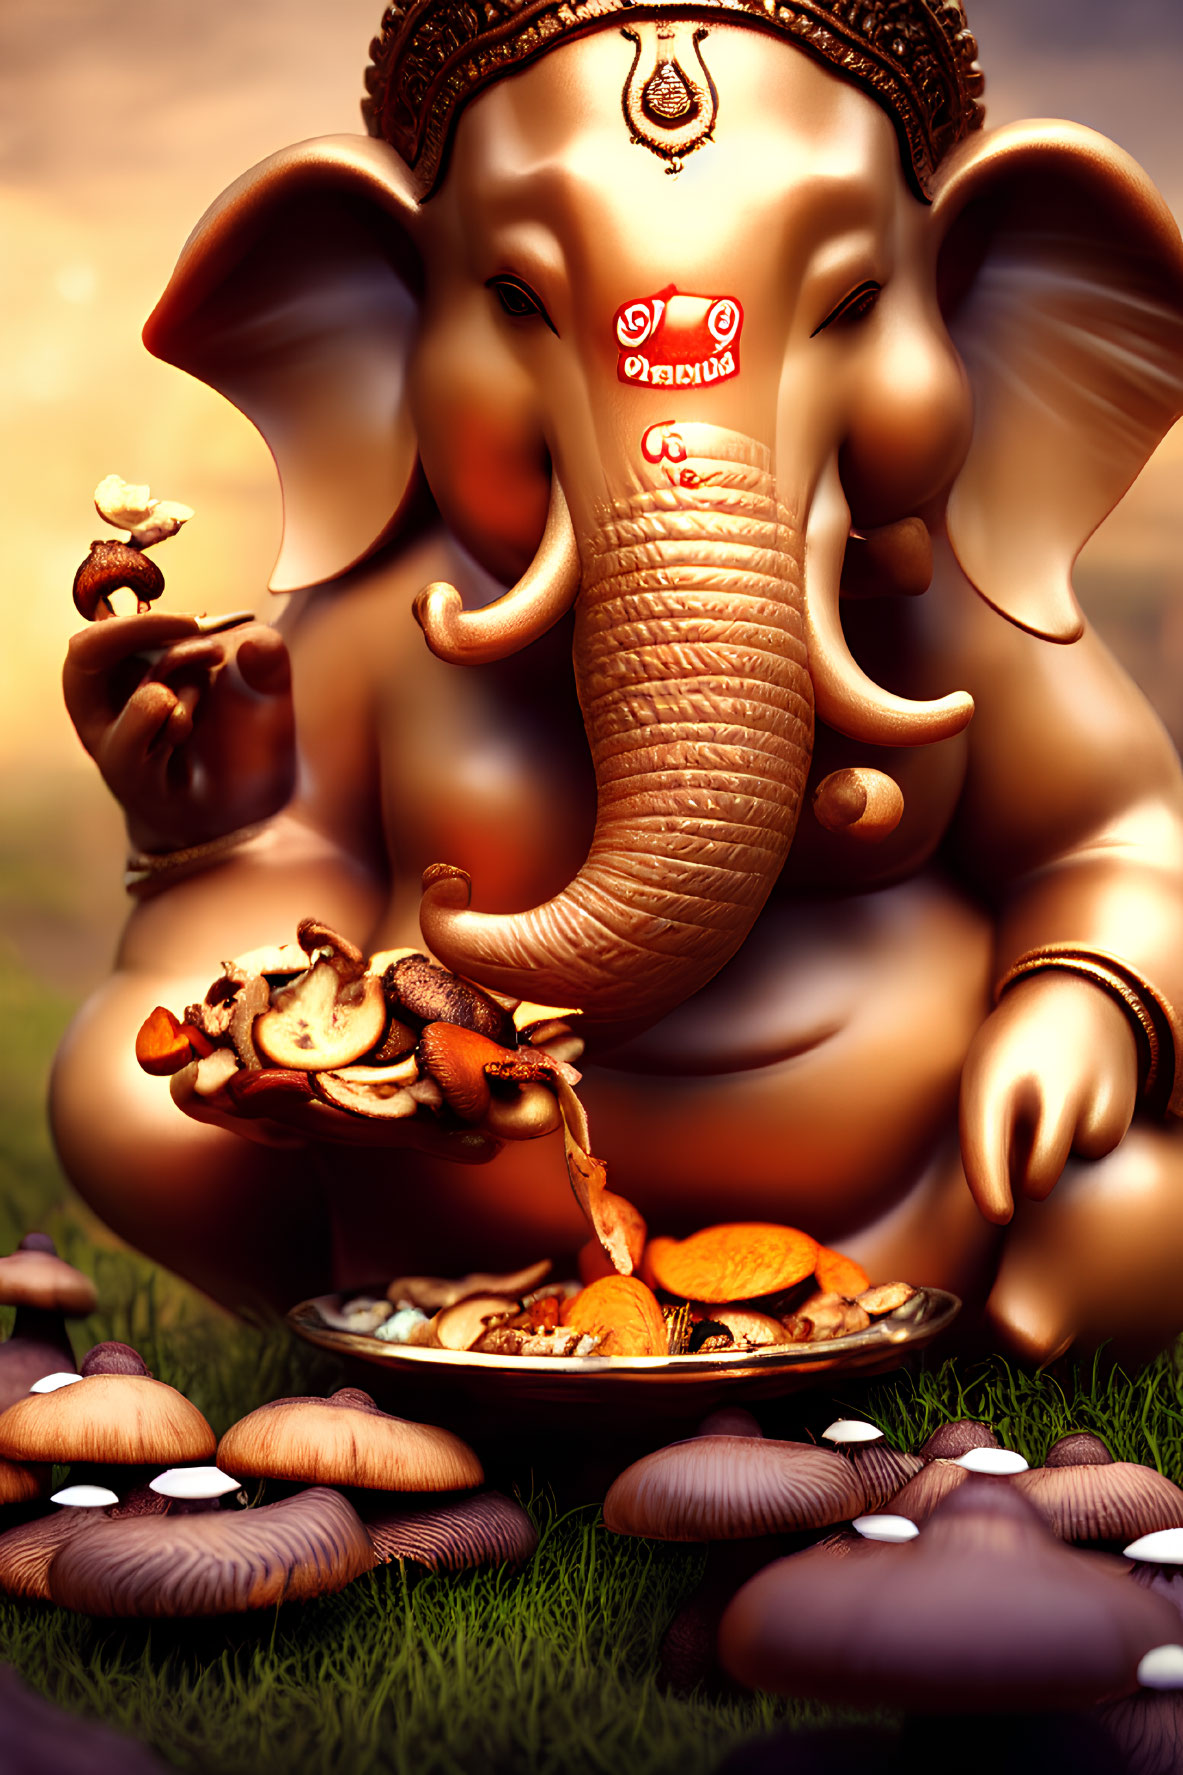 Vibrant Hindu deity Ganesha with mouse, mushrooms, and sweets